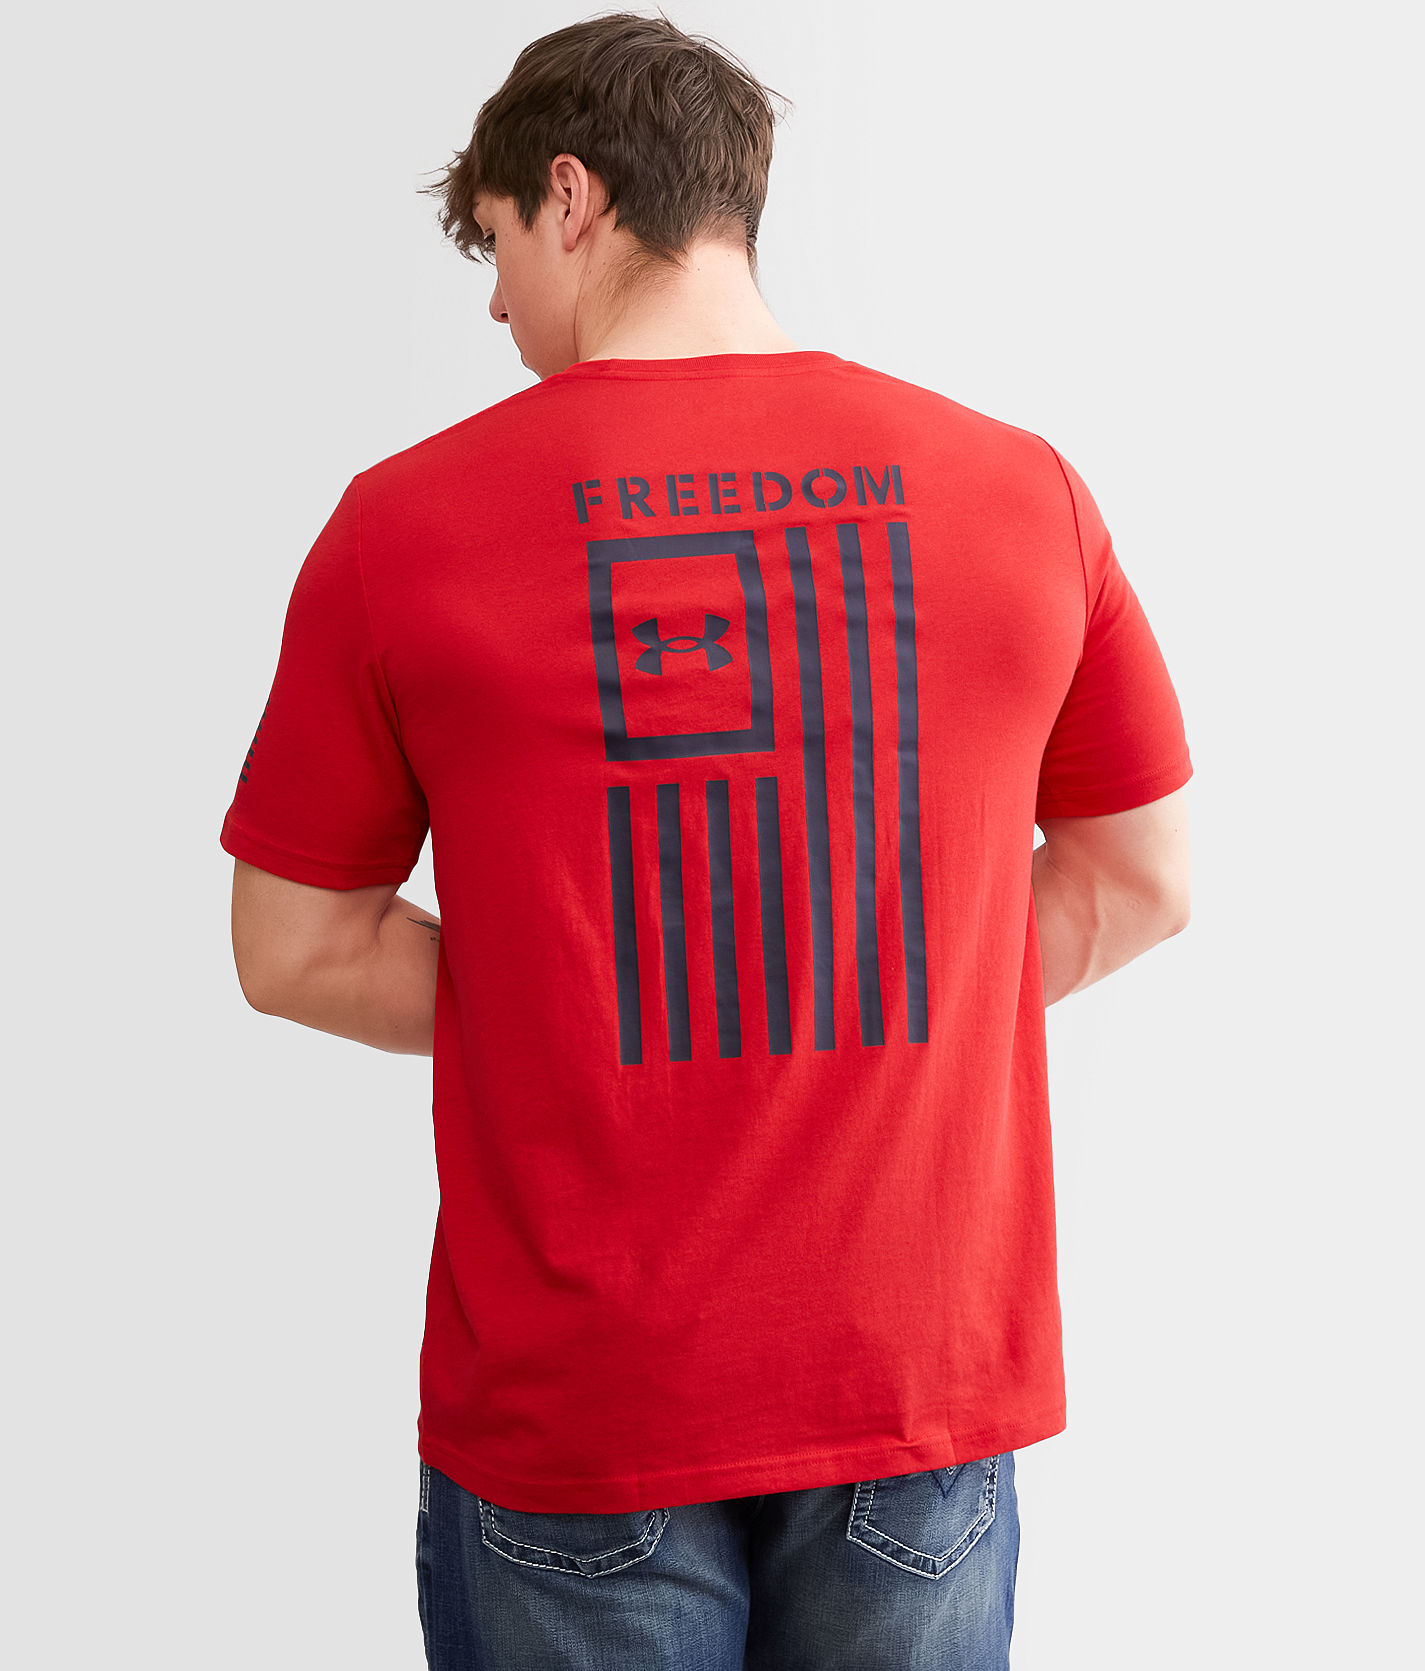 Under Armour Freedom USA Undefeated Navy – The Flag Shirt